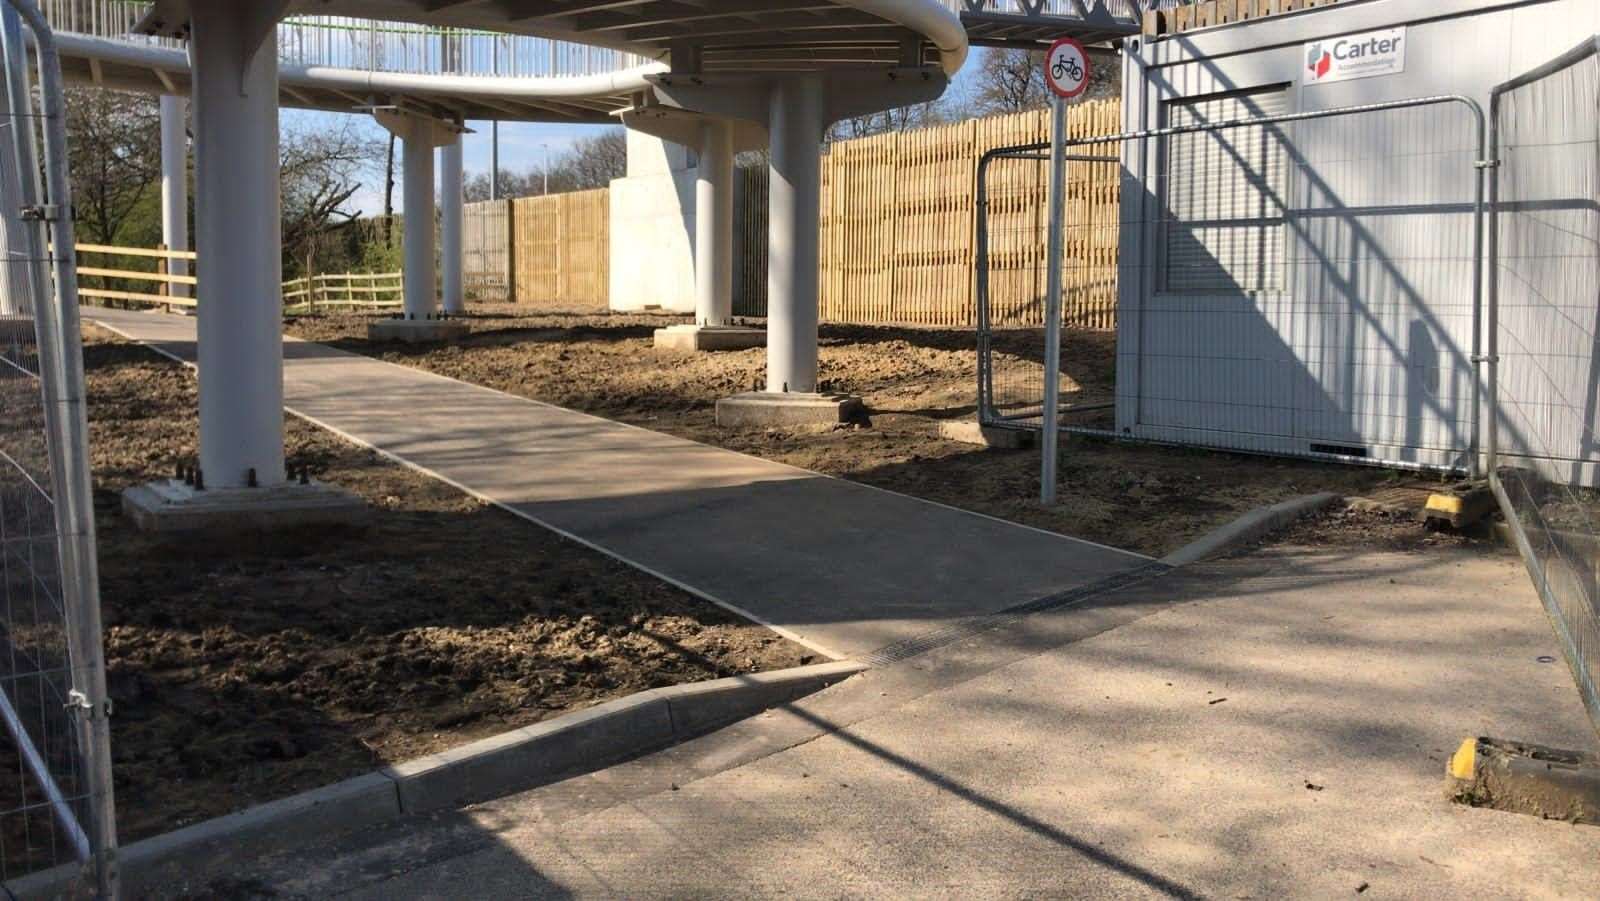 Part of the new pedestrian access ramp